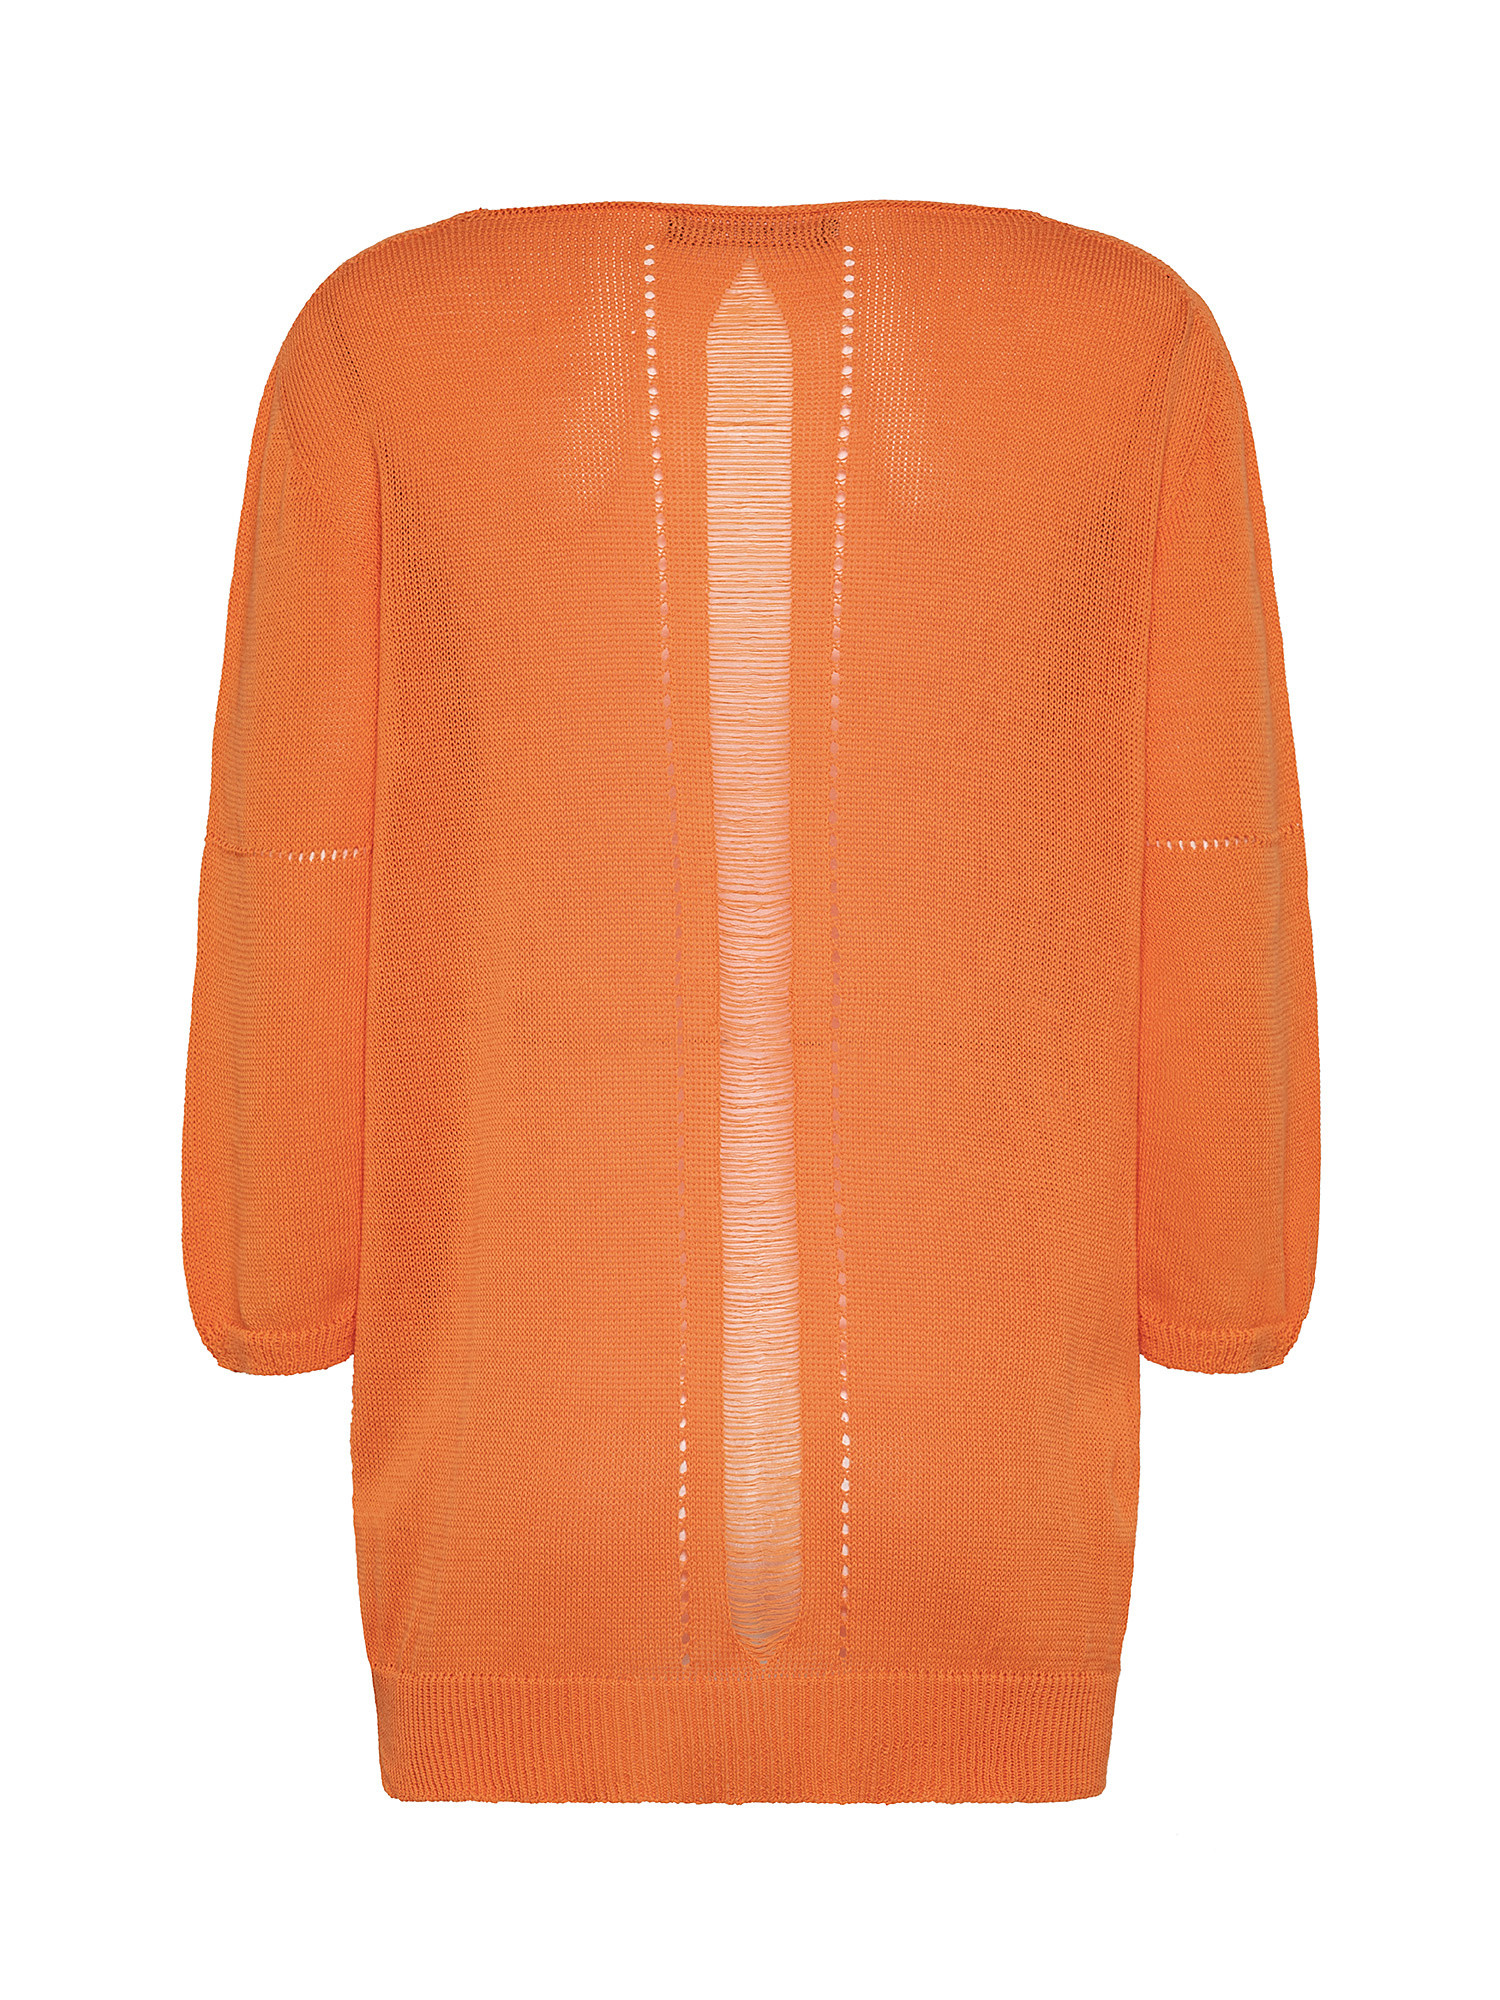 Tricot sweater, Orange, large image number 1